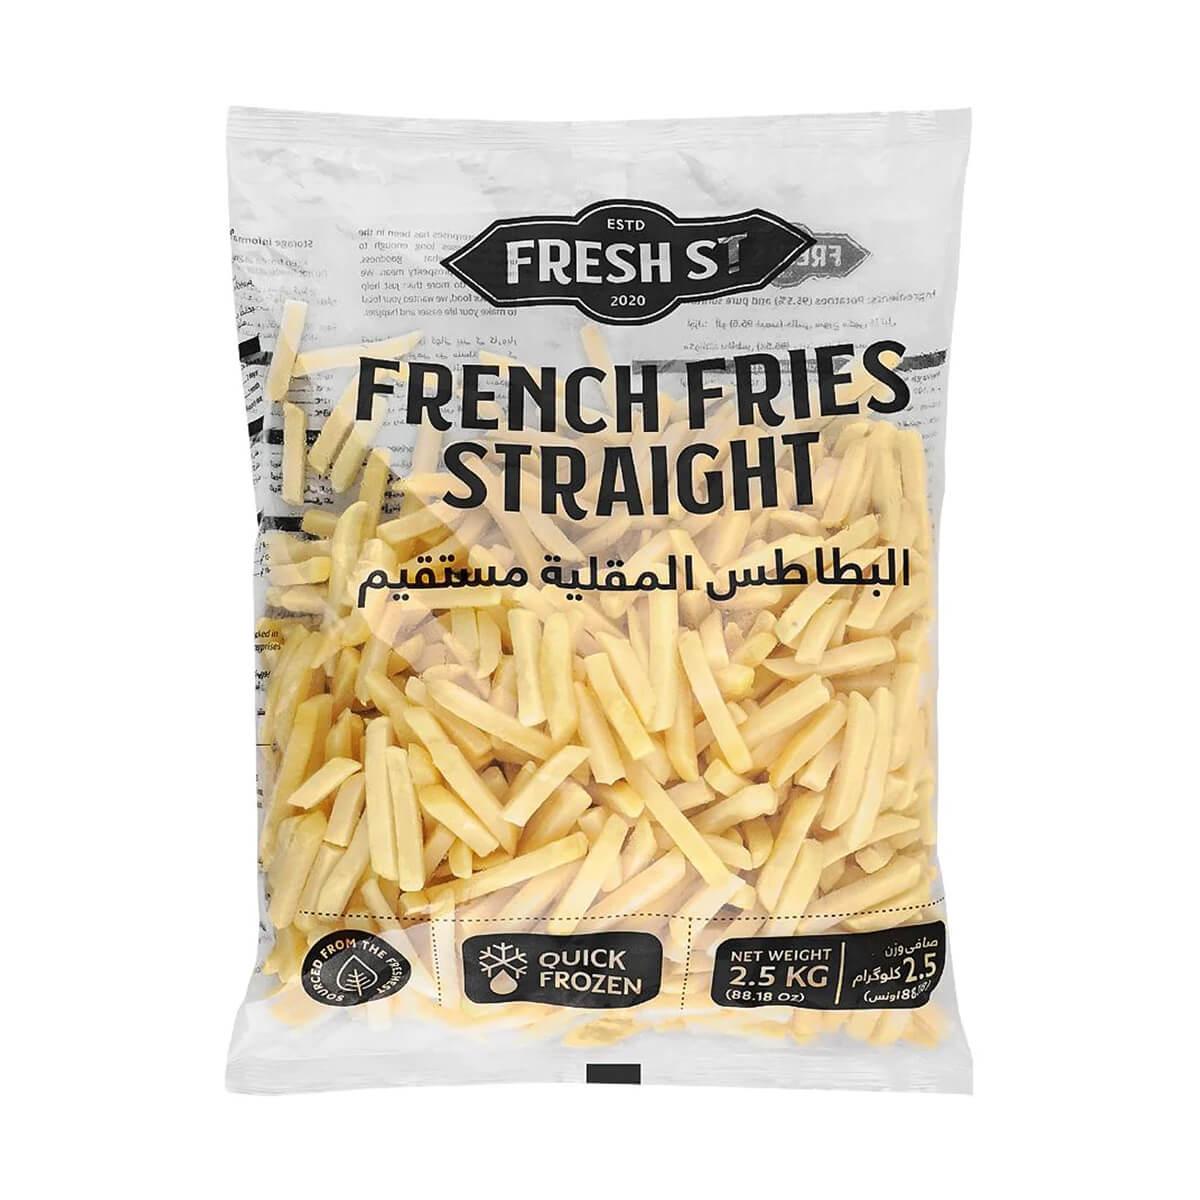 GGO.ae Fresh St. French Fries Straight, 9x9mm - 4x2.5kg